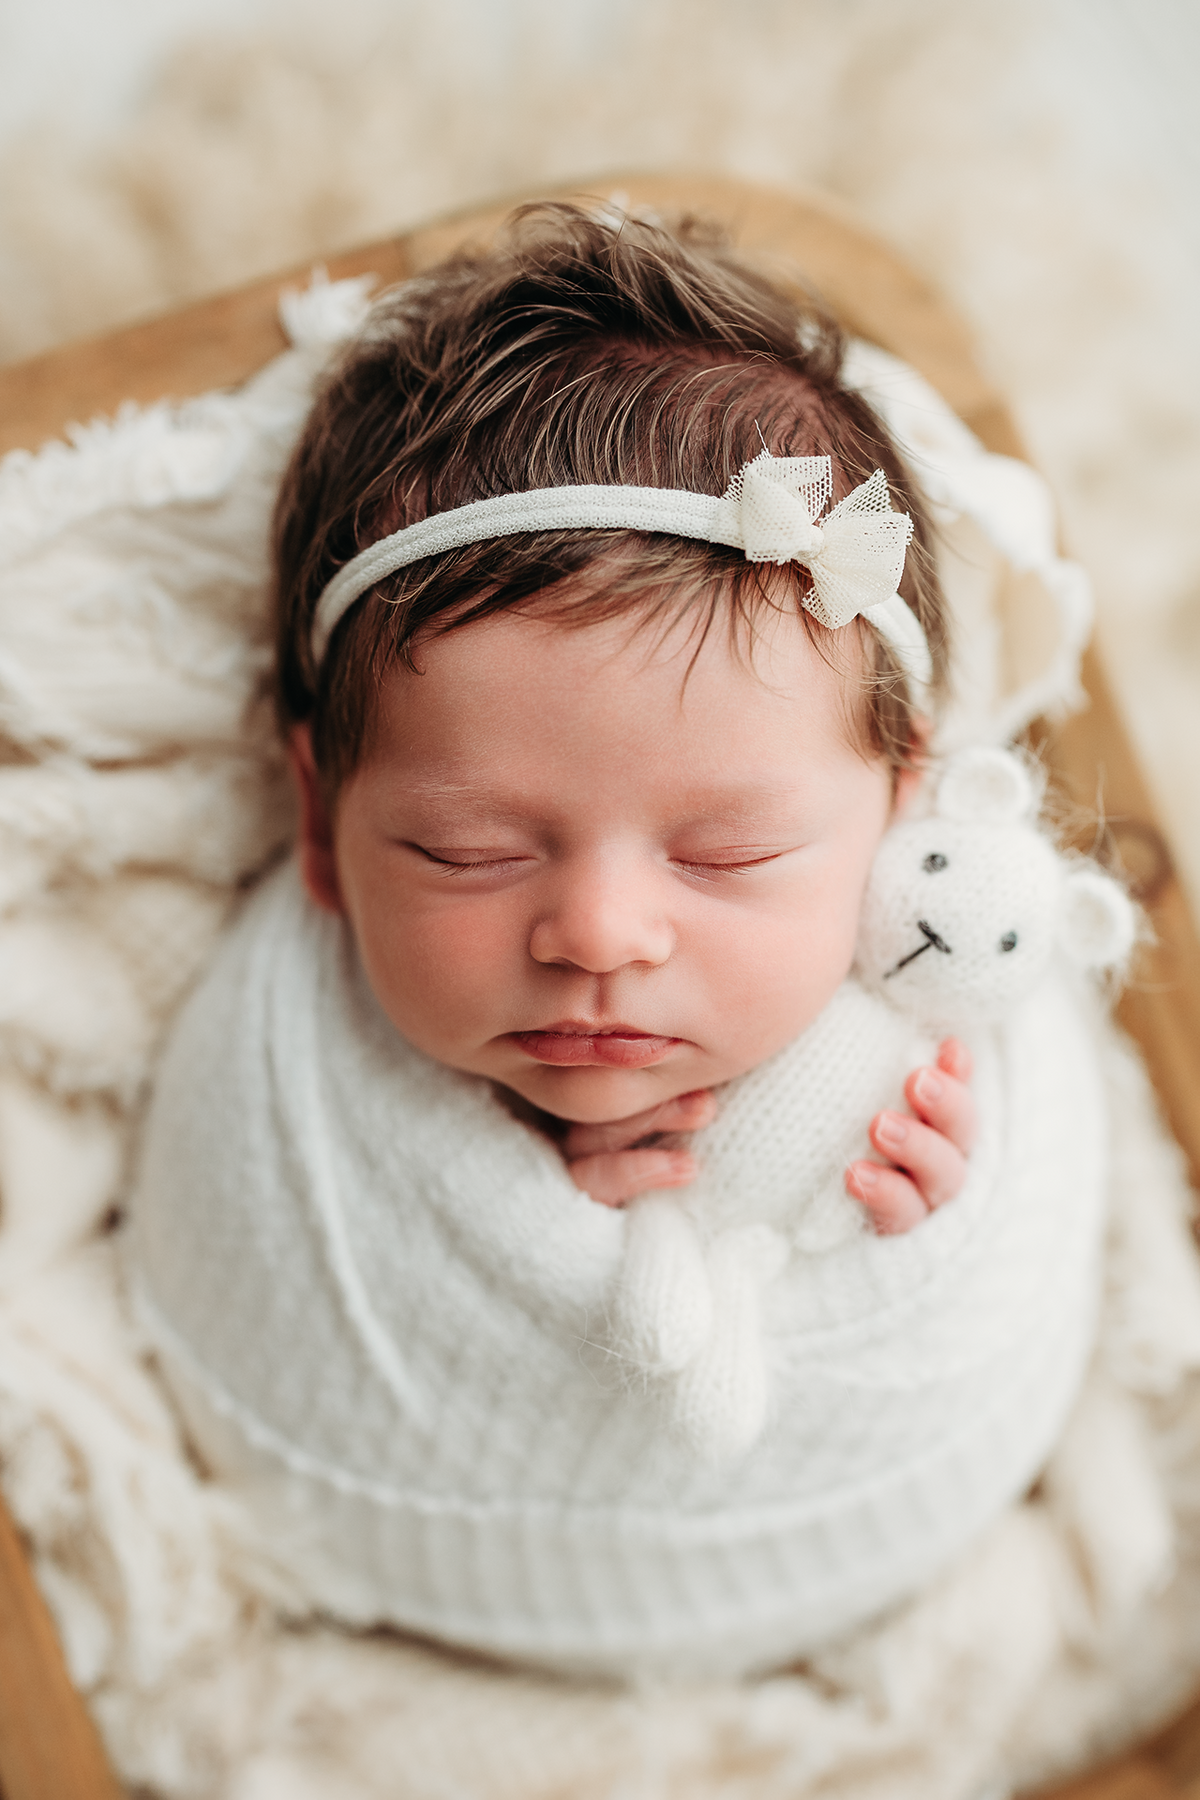 memphis newborn photography by jen howell 3r